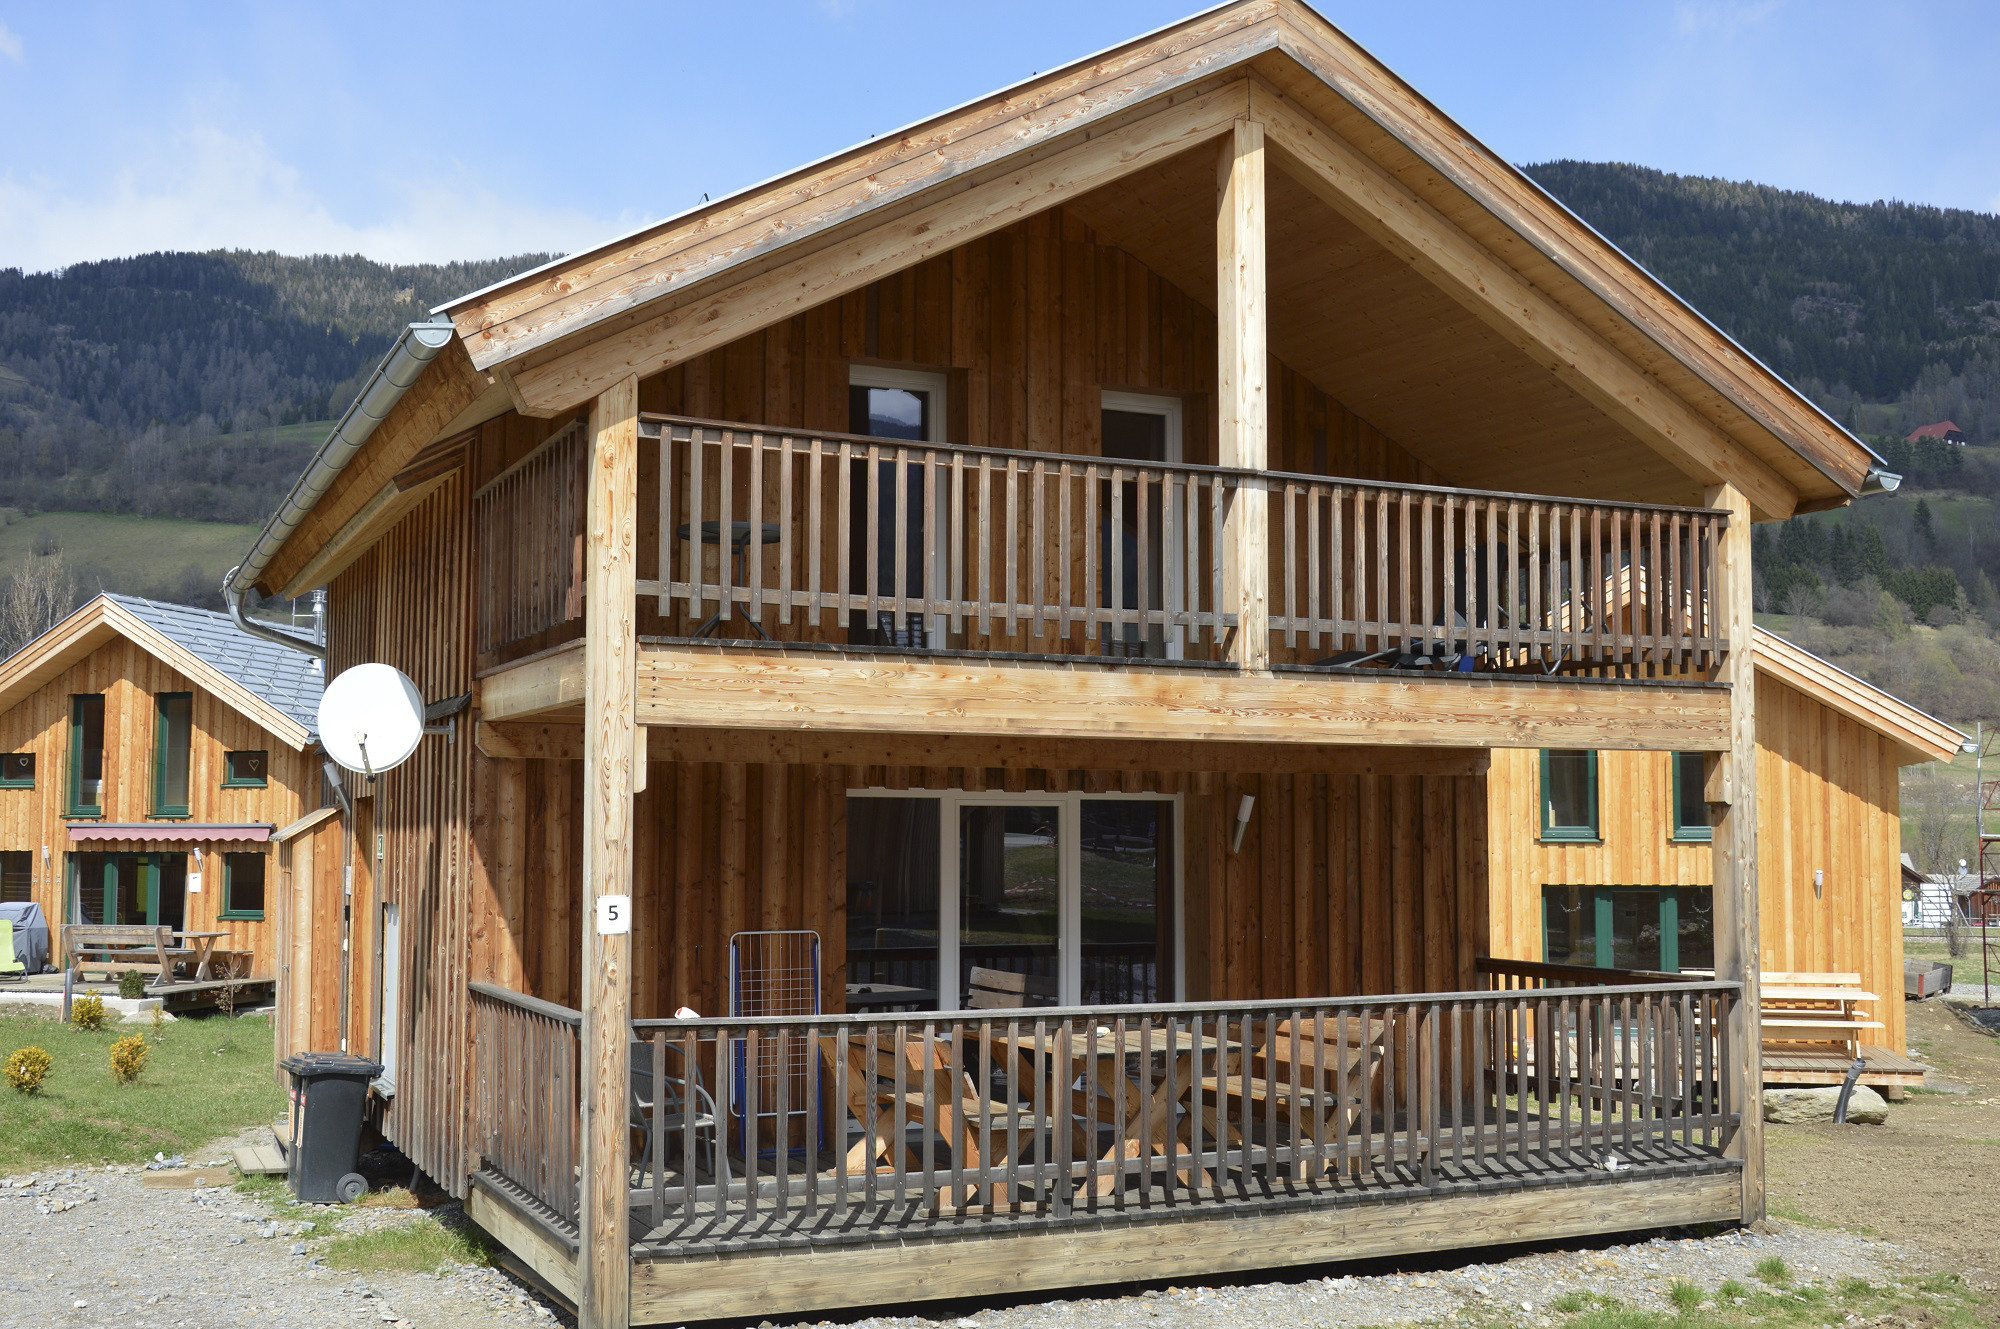  in St. Georgen am Kreischberg - Chalet # 5 with 3 bedrooms & IR sauna